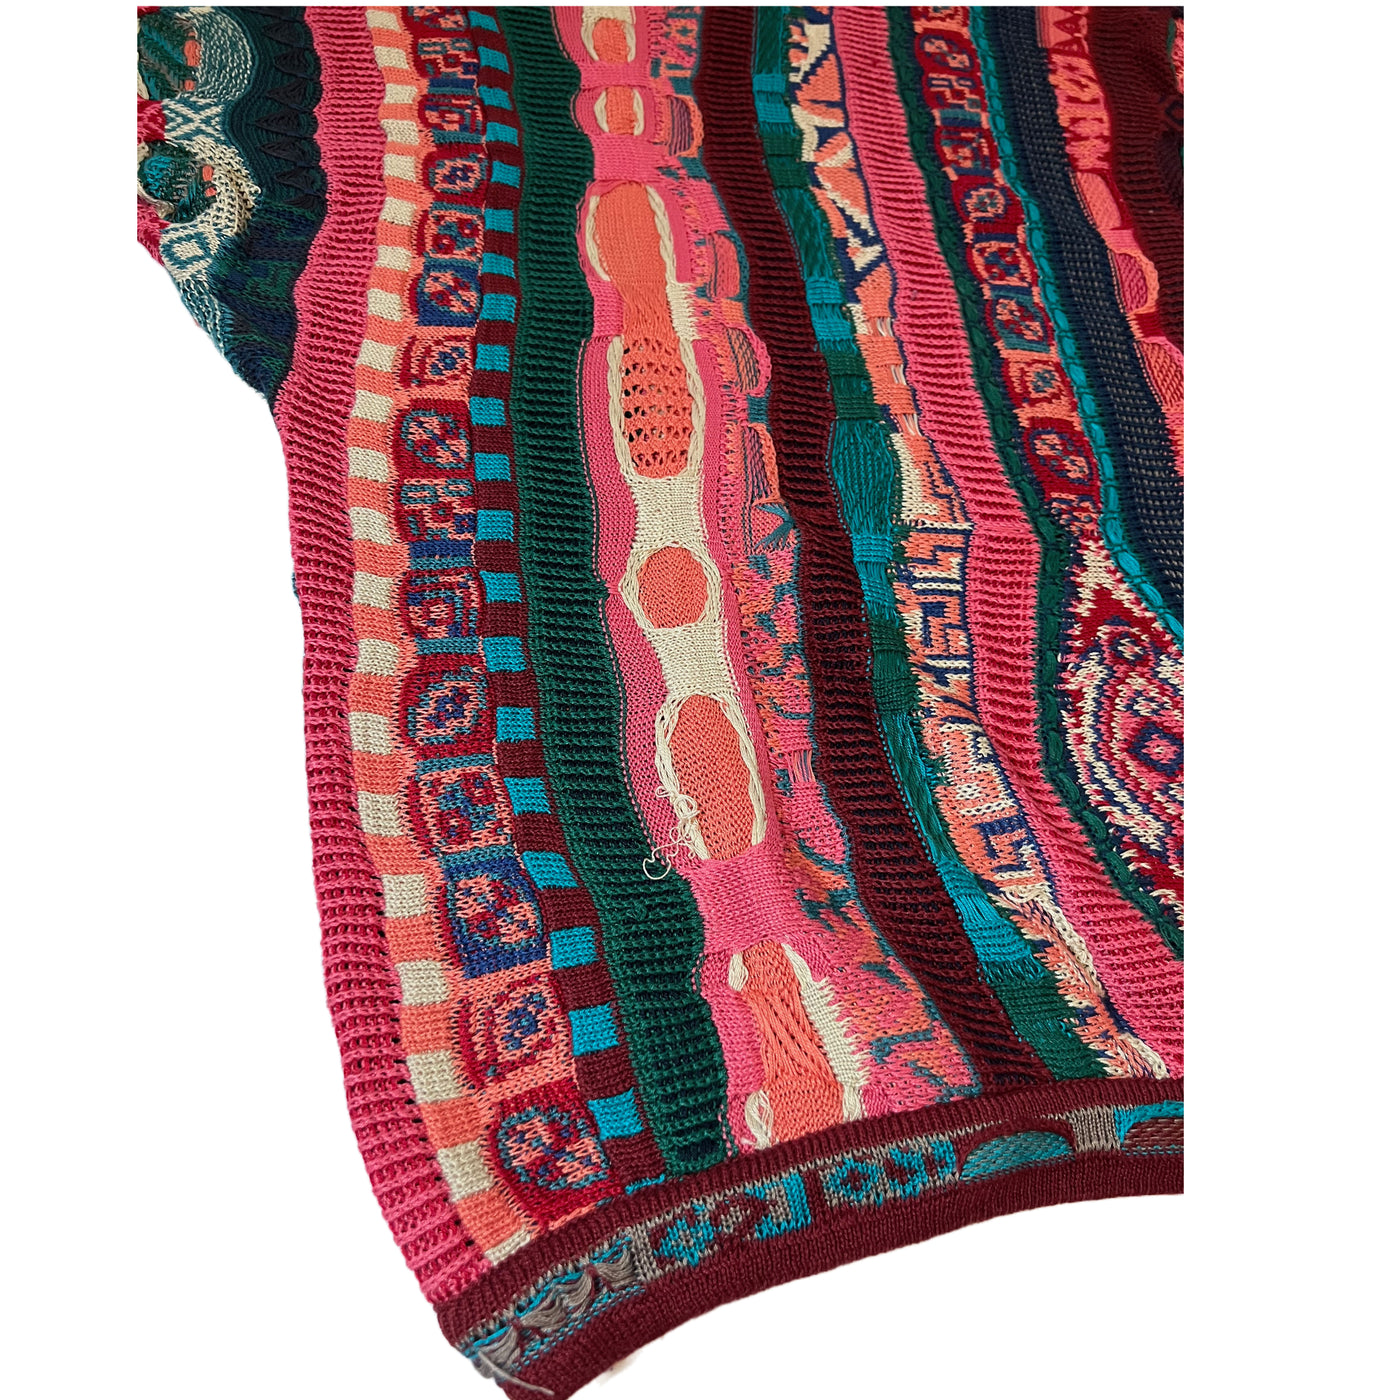 Vintage COOGI cotton multi color sweater. Size M